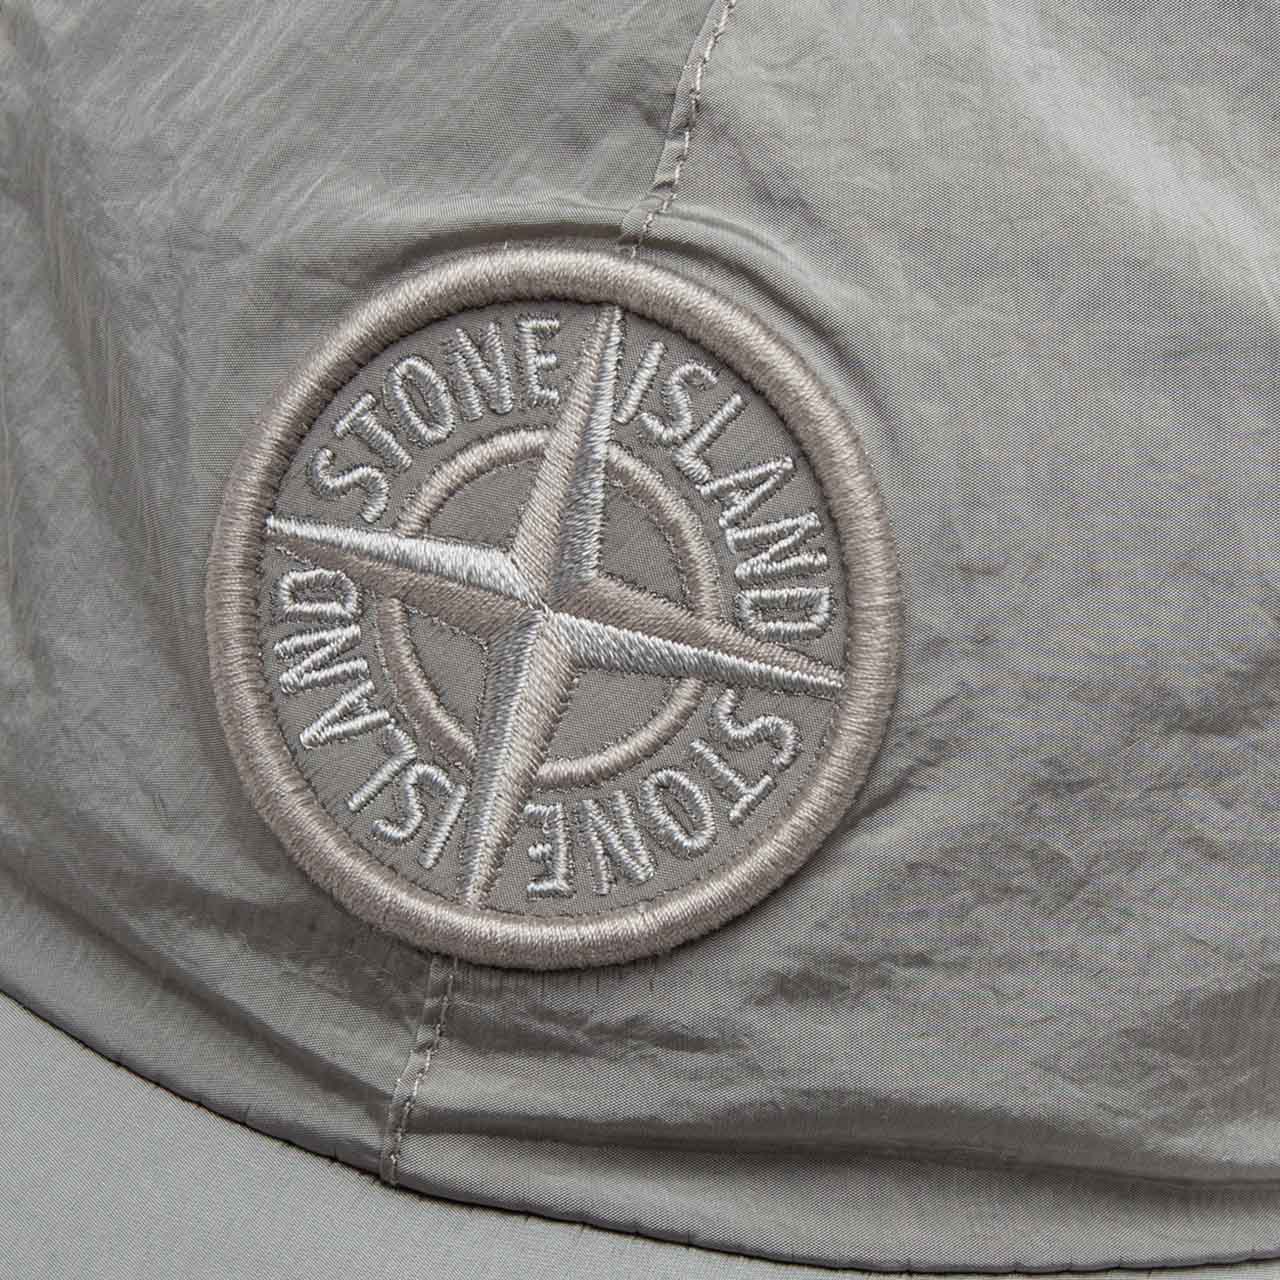 stone island nylon cap (plaster)